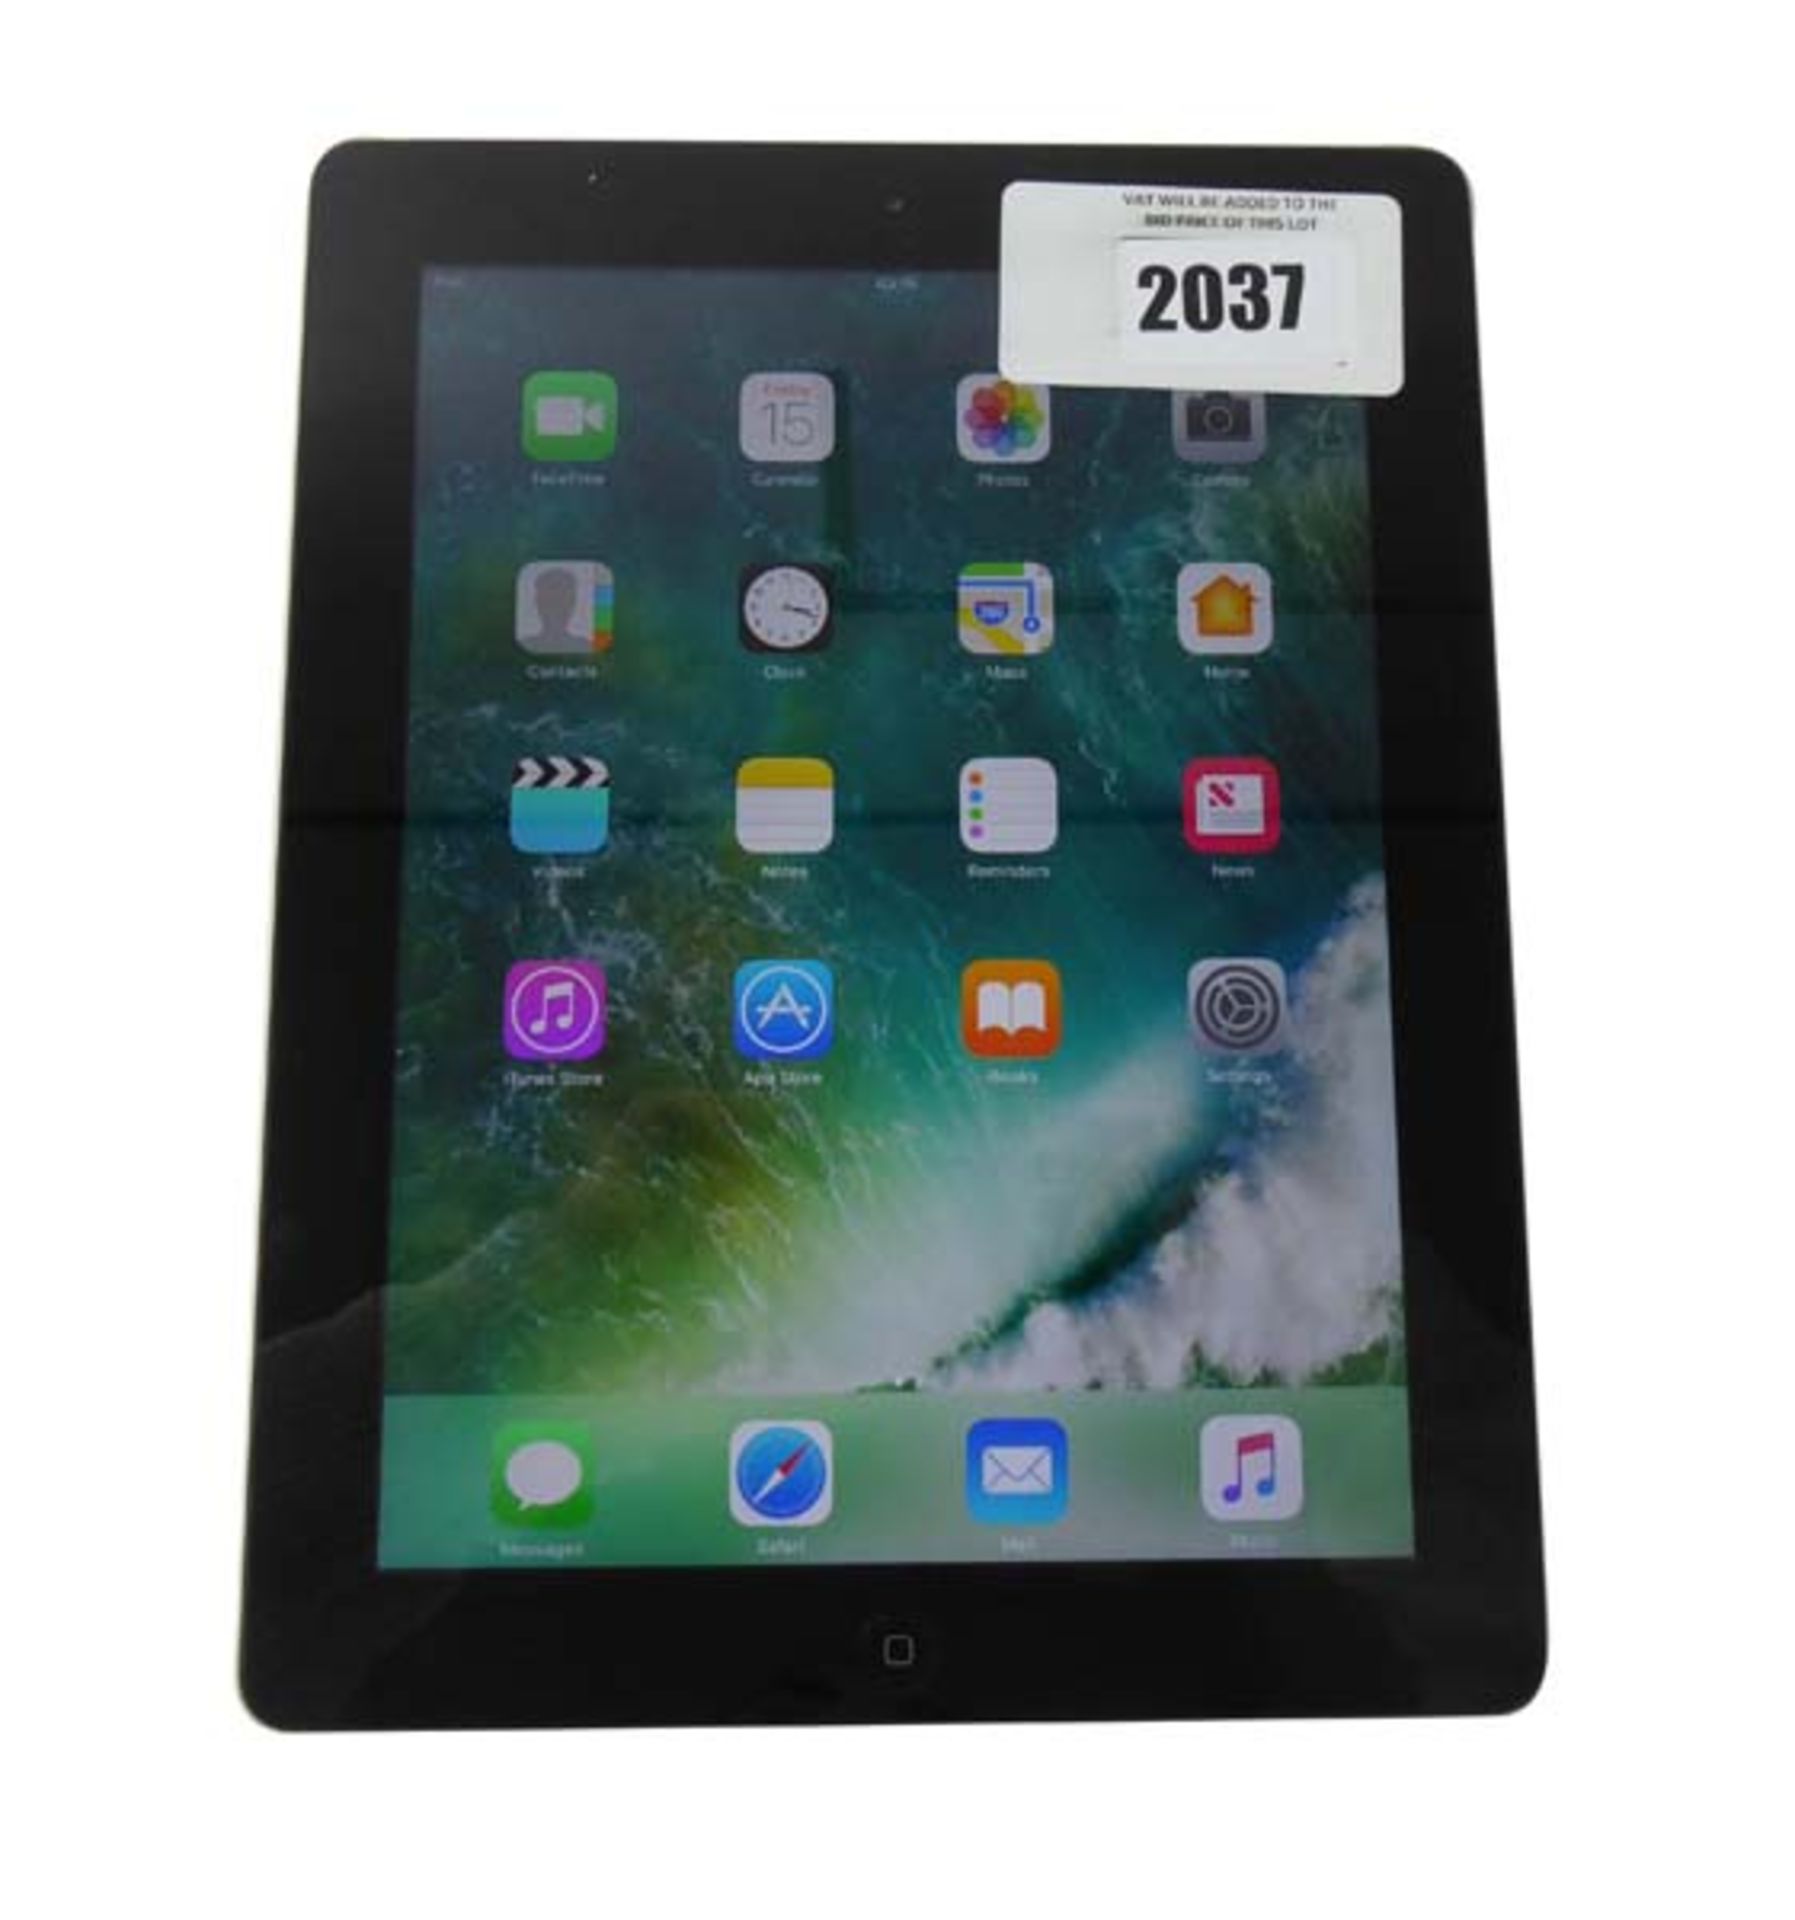 iPad 16GB Silver tablet (A1458 4th Gen)